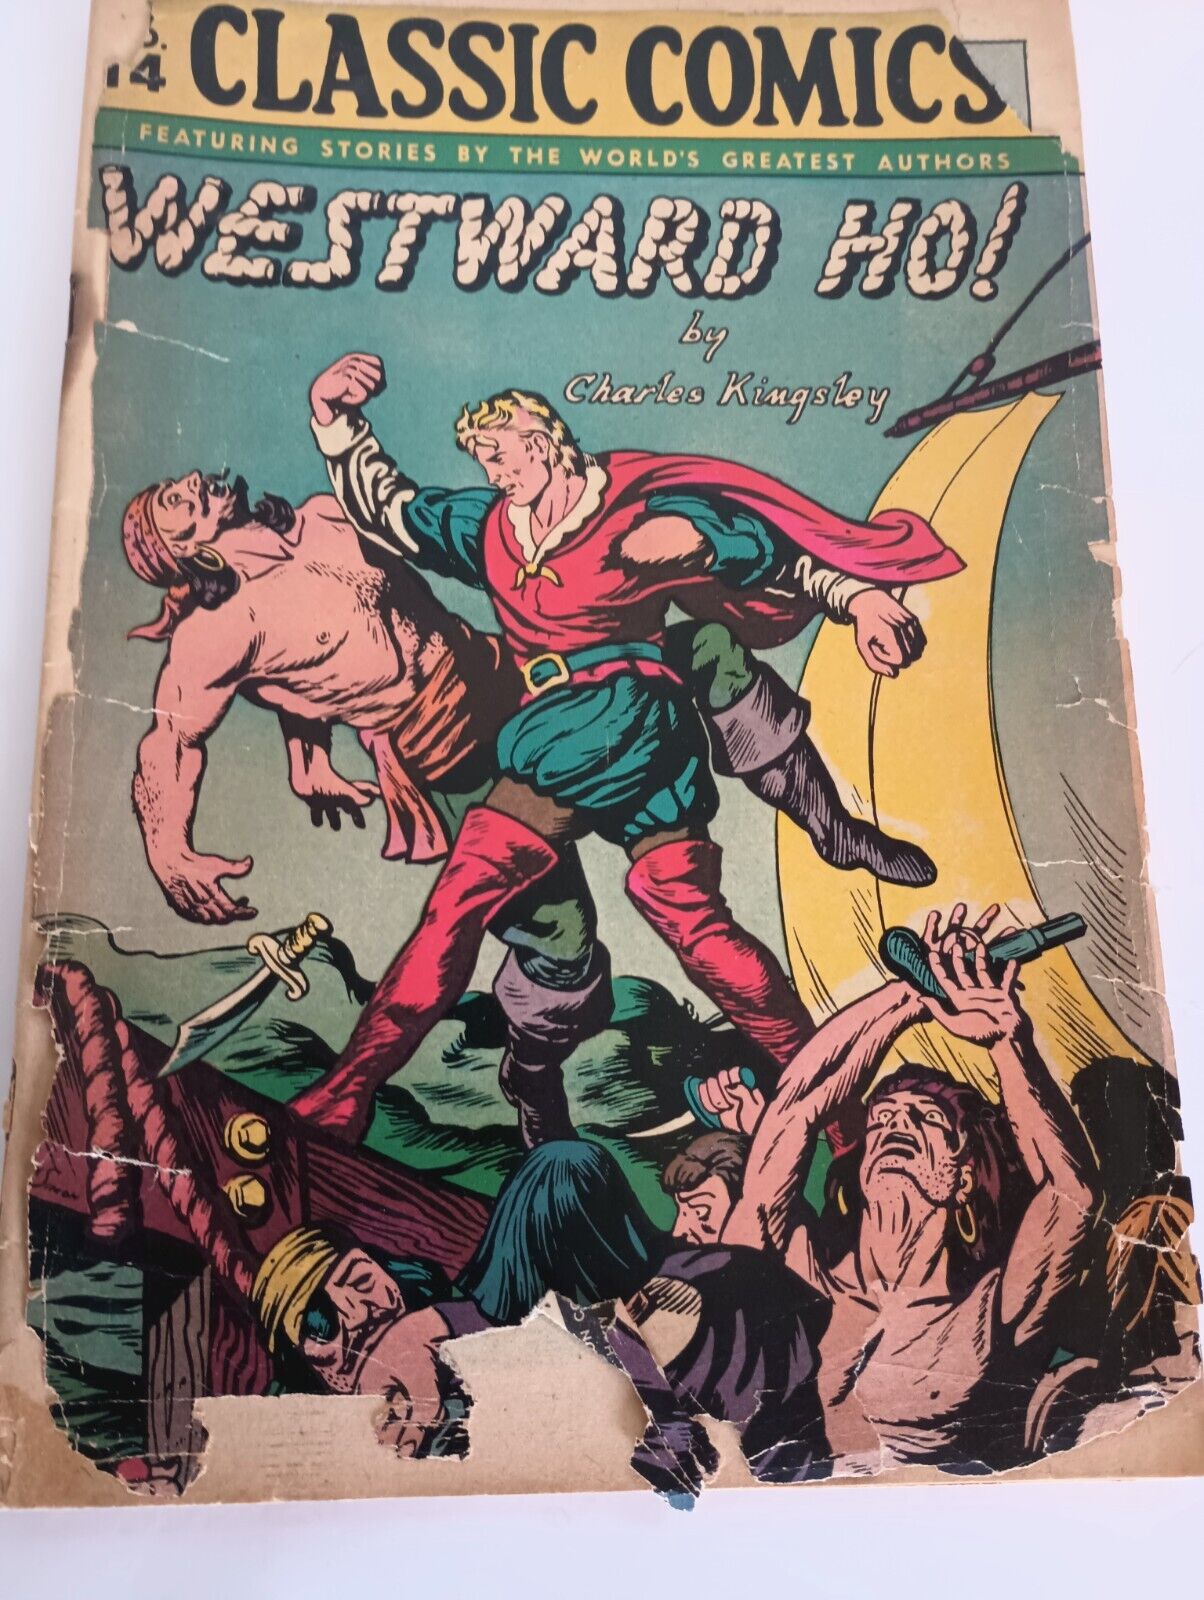 Classic Comics #14 Westward Ho 1946 Charles Kingsley HTF See Pics